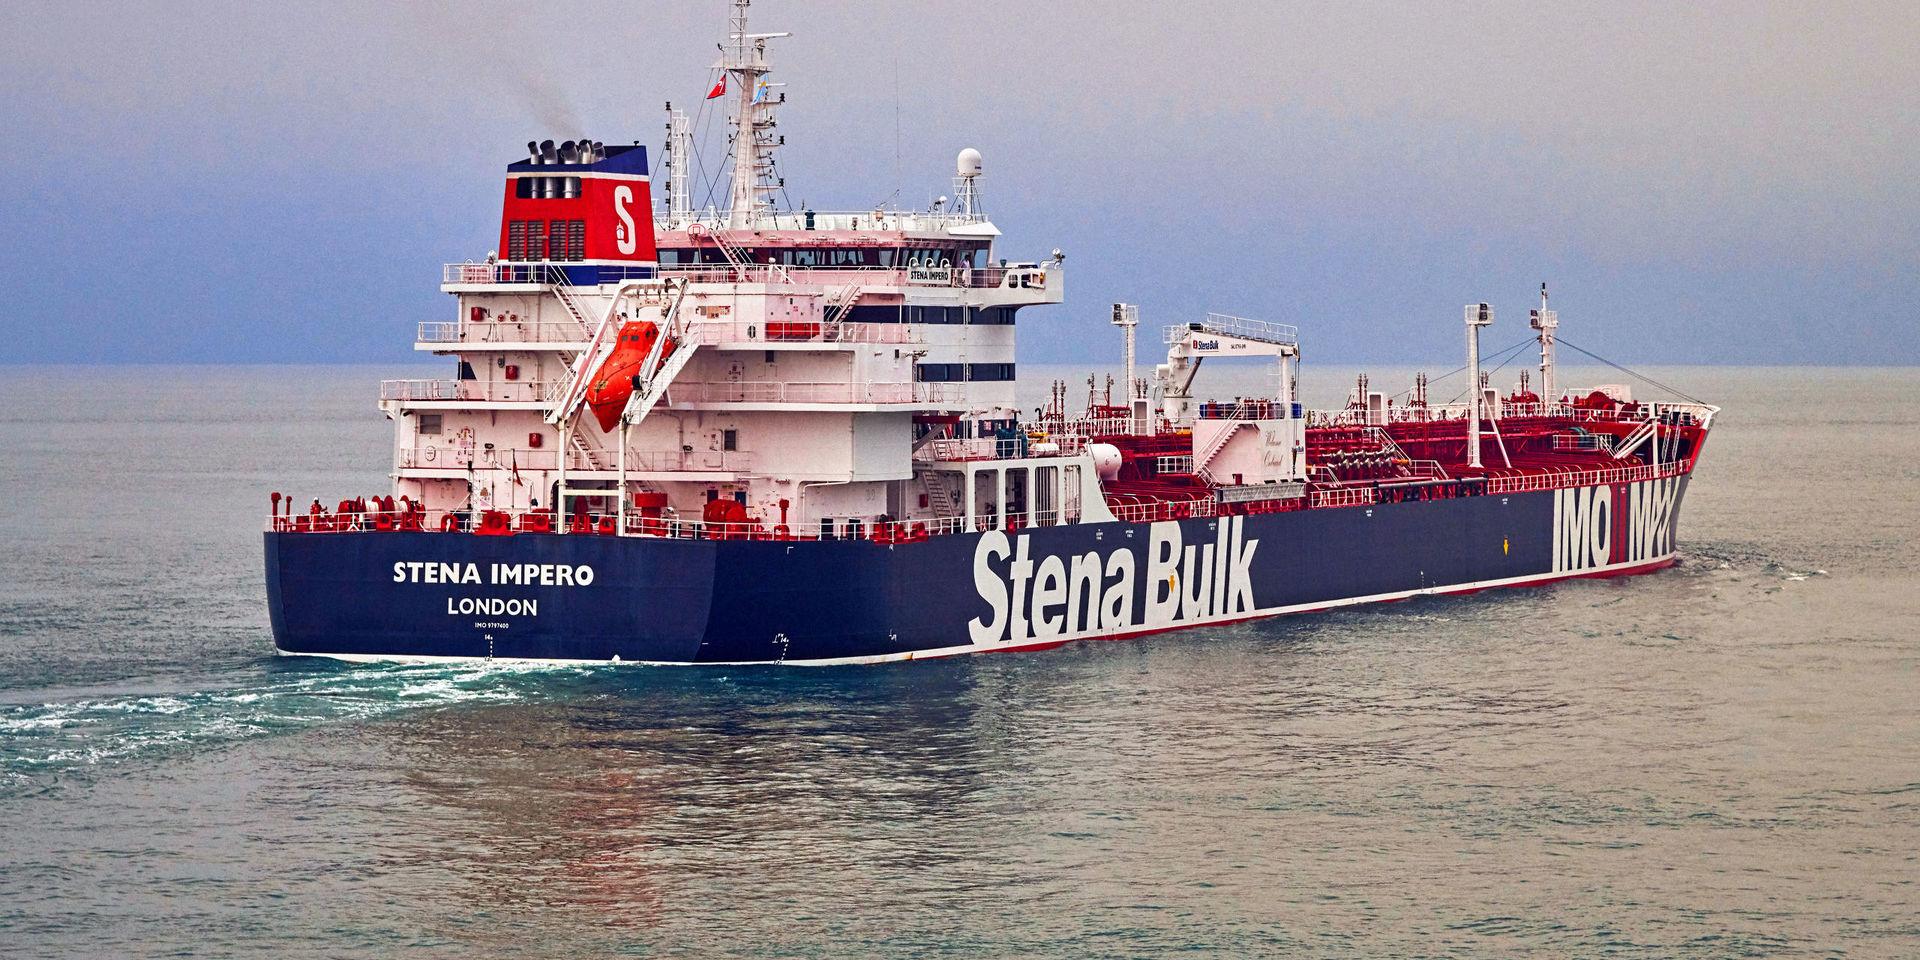  Så sent som i somras beslagtog Iran det brittiskflaggade Stena Bulk-fartyget Impero i Hormuzsundet.